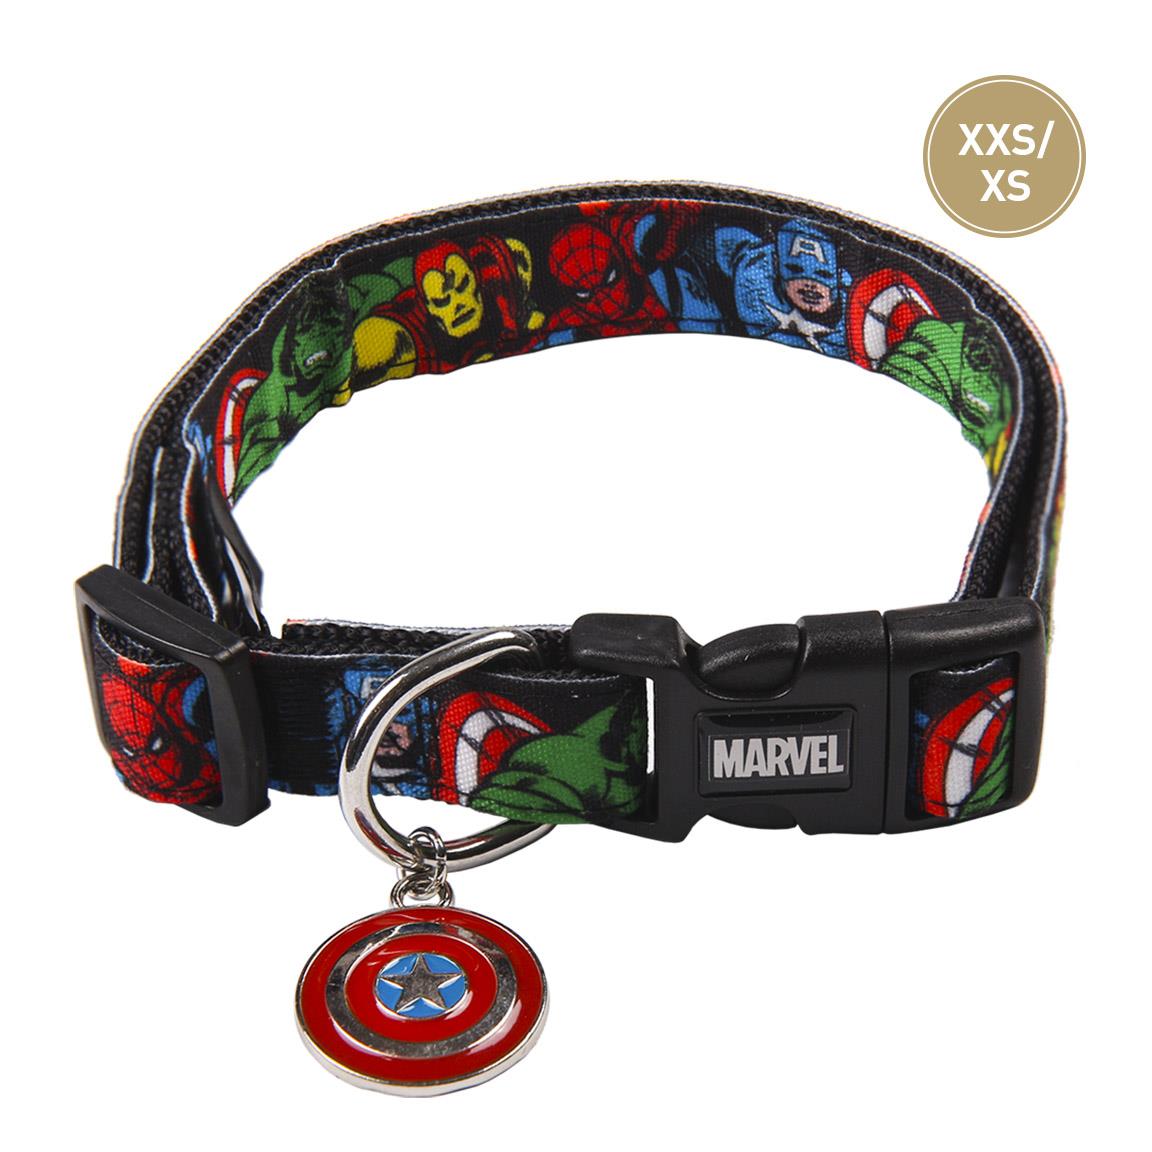 Marvel Dog Collar Xxs/Xs